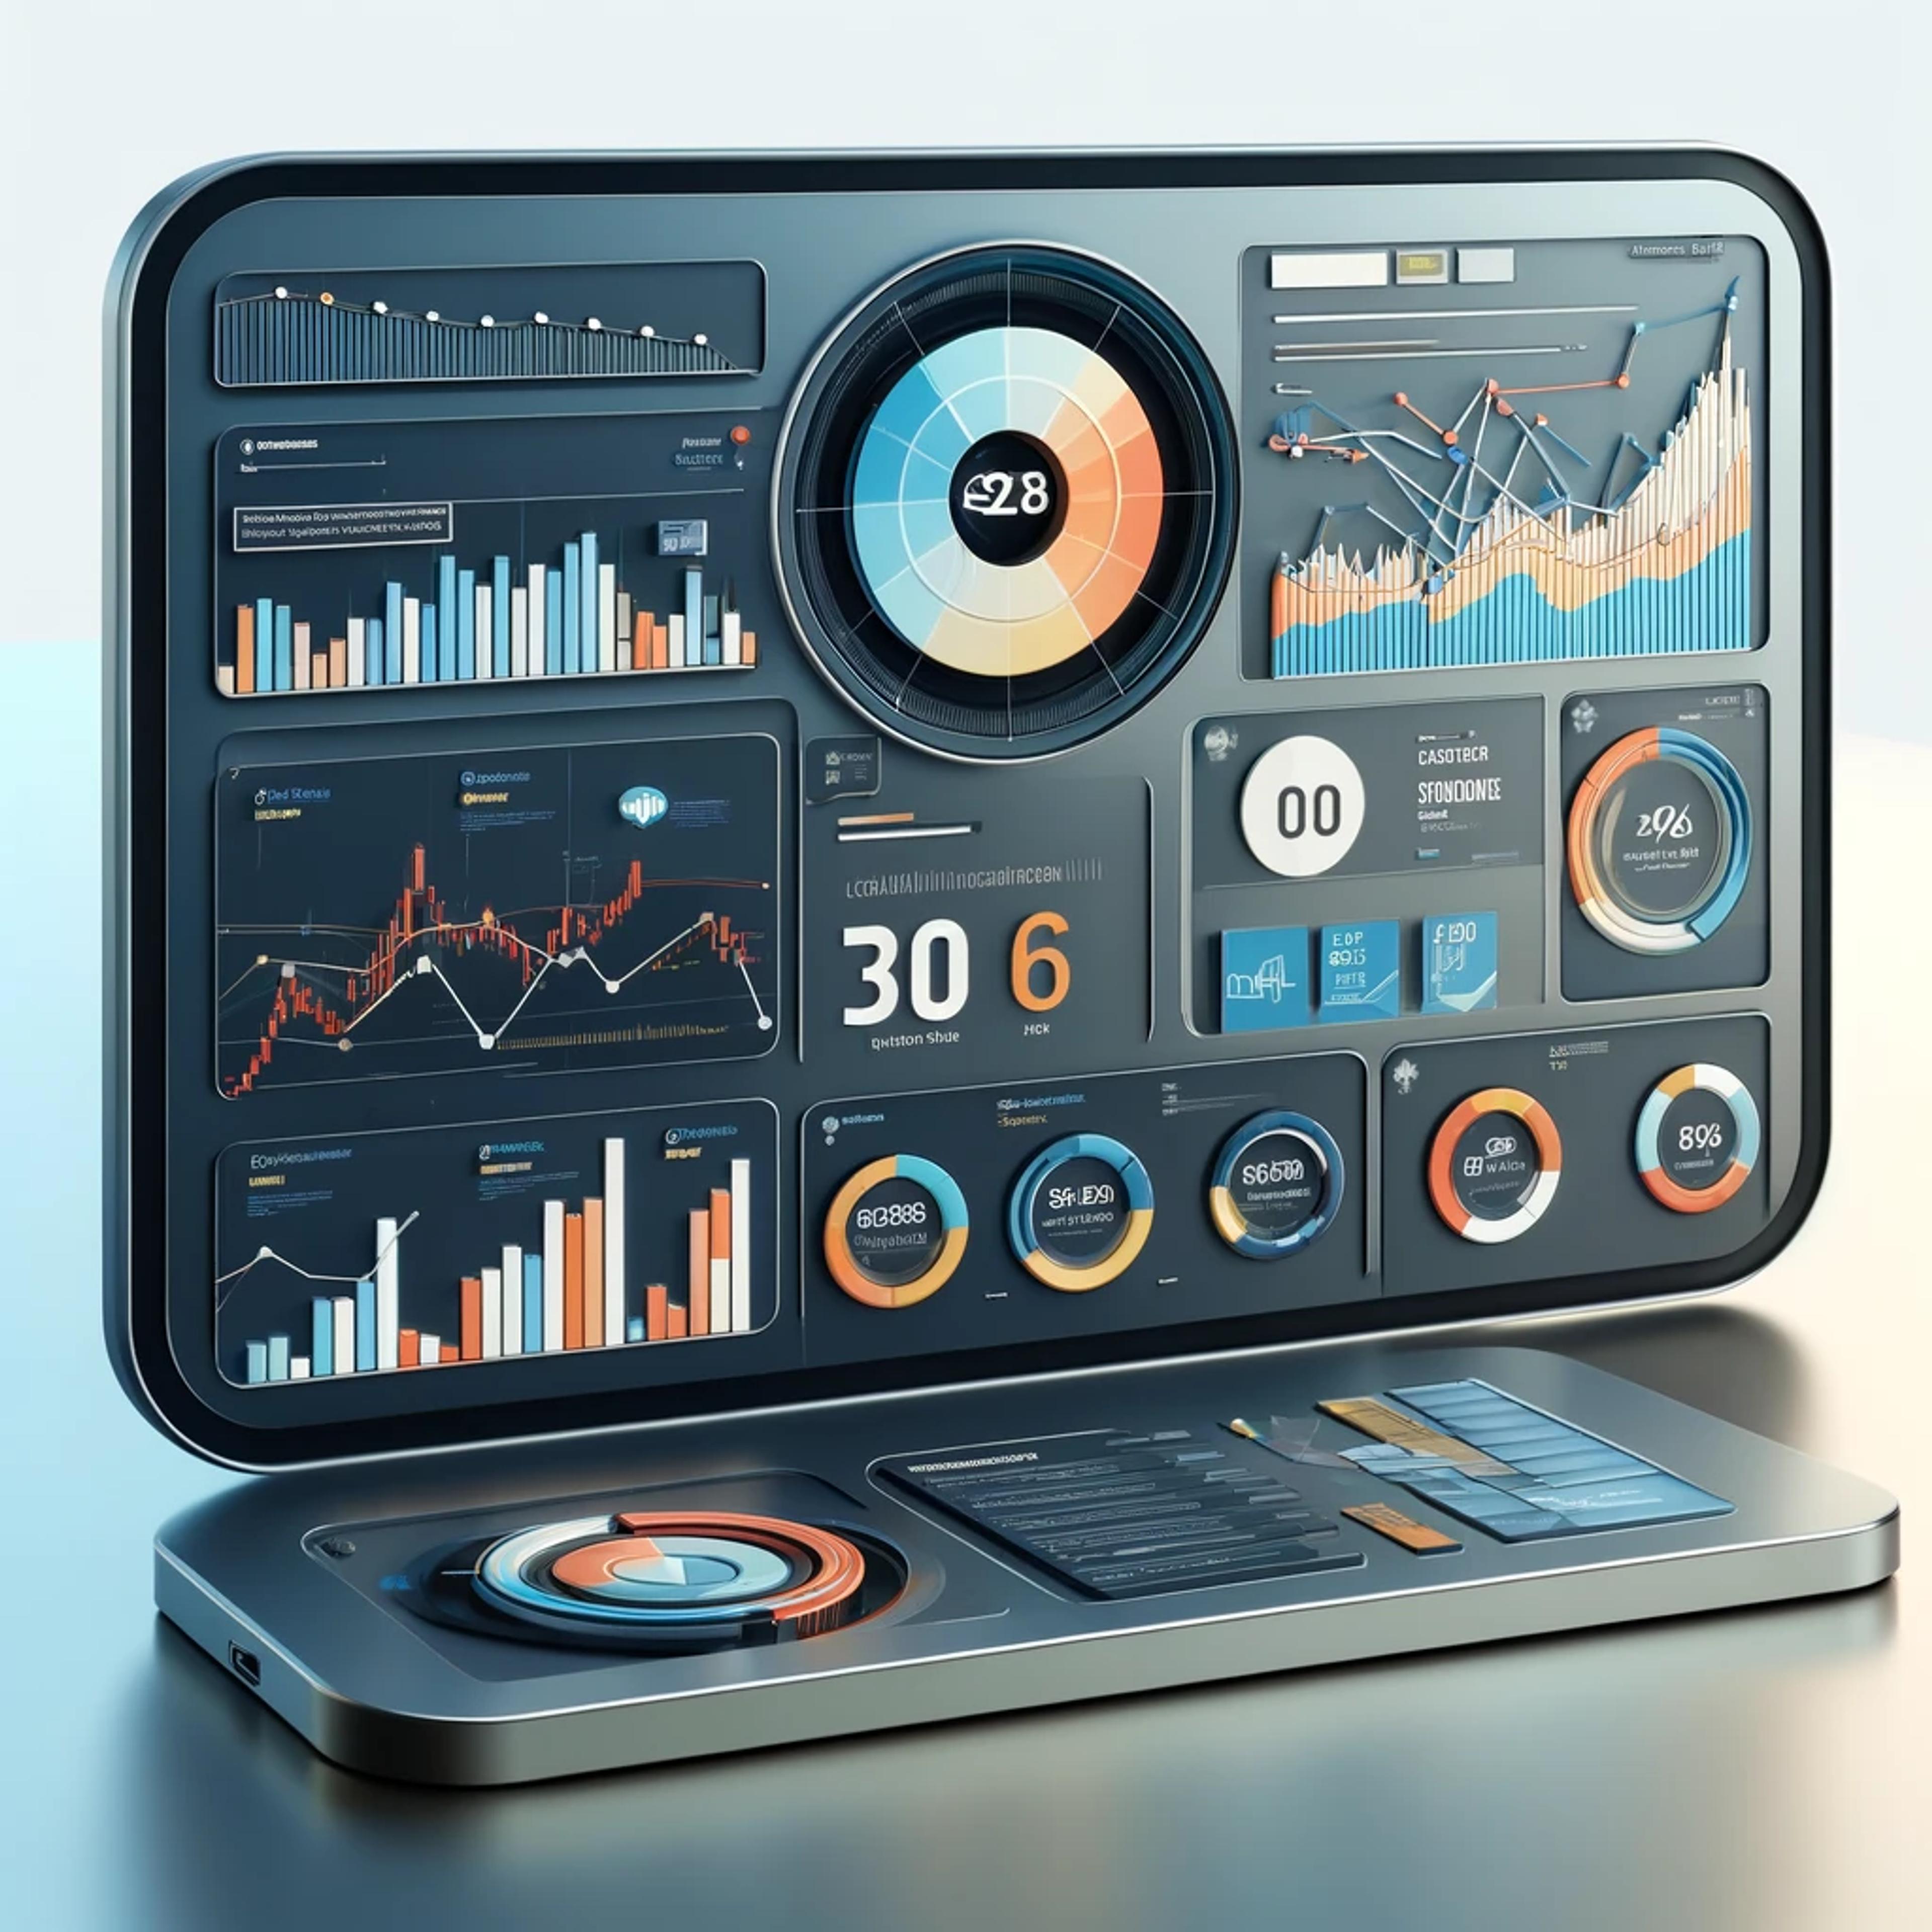 Sleek analytics dashboard showing key eCommerce metrics like user behavior and conversion rates